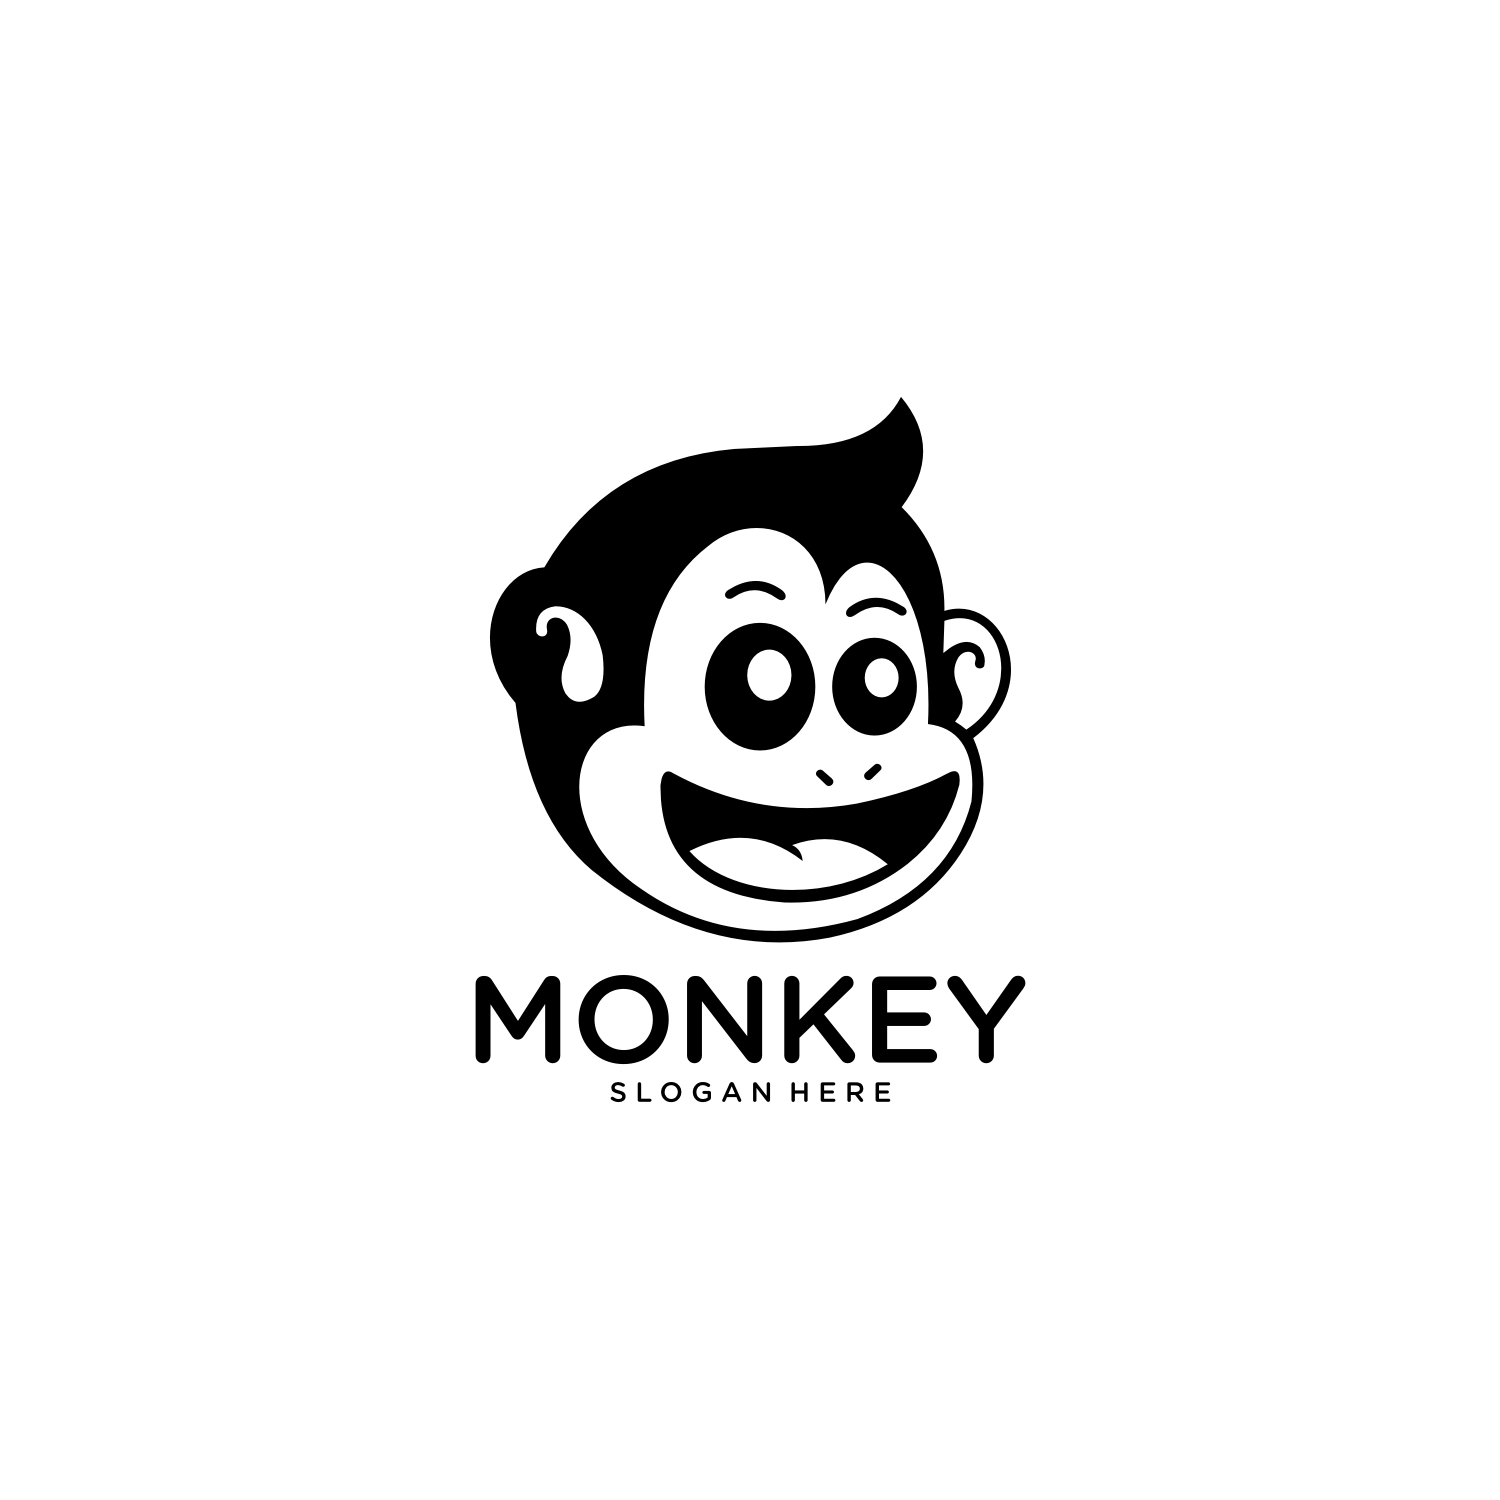 Head Monkey Vector Logo Animal Template image.